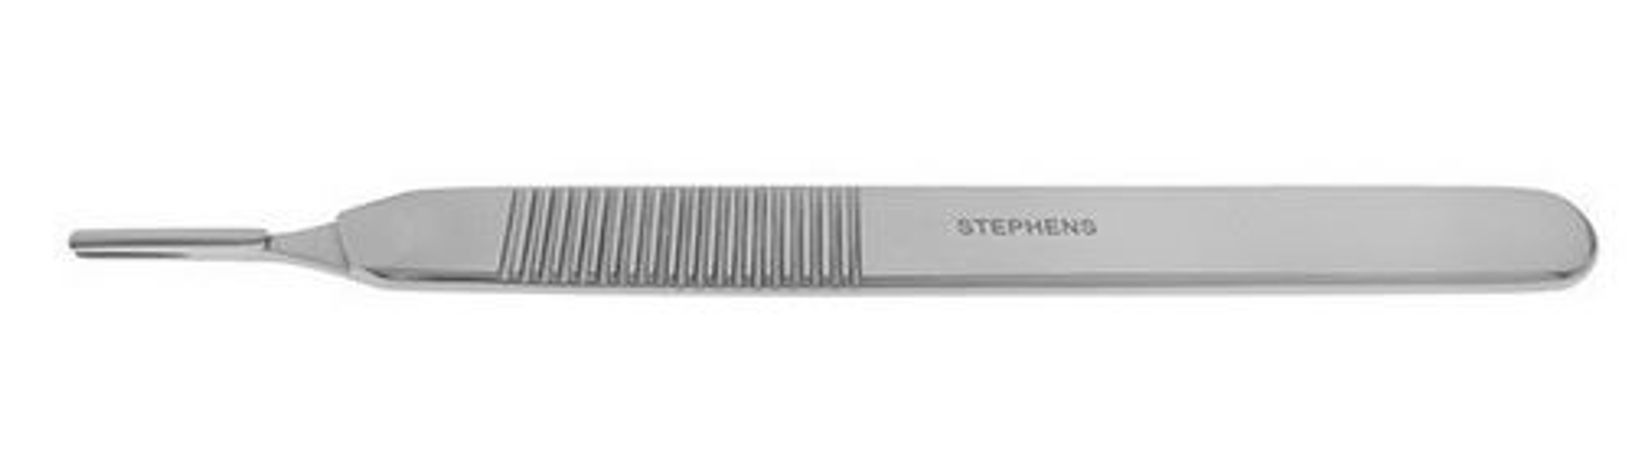 Stephens - Model 3-AD-1000 - Handle Blade